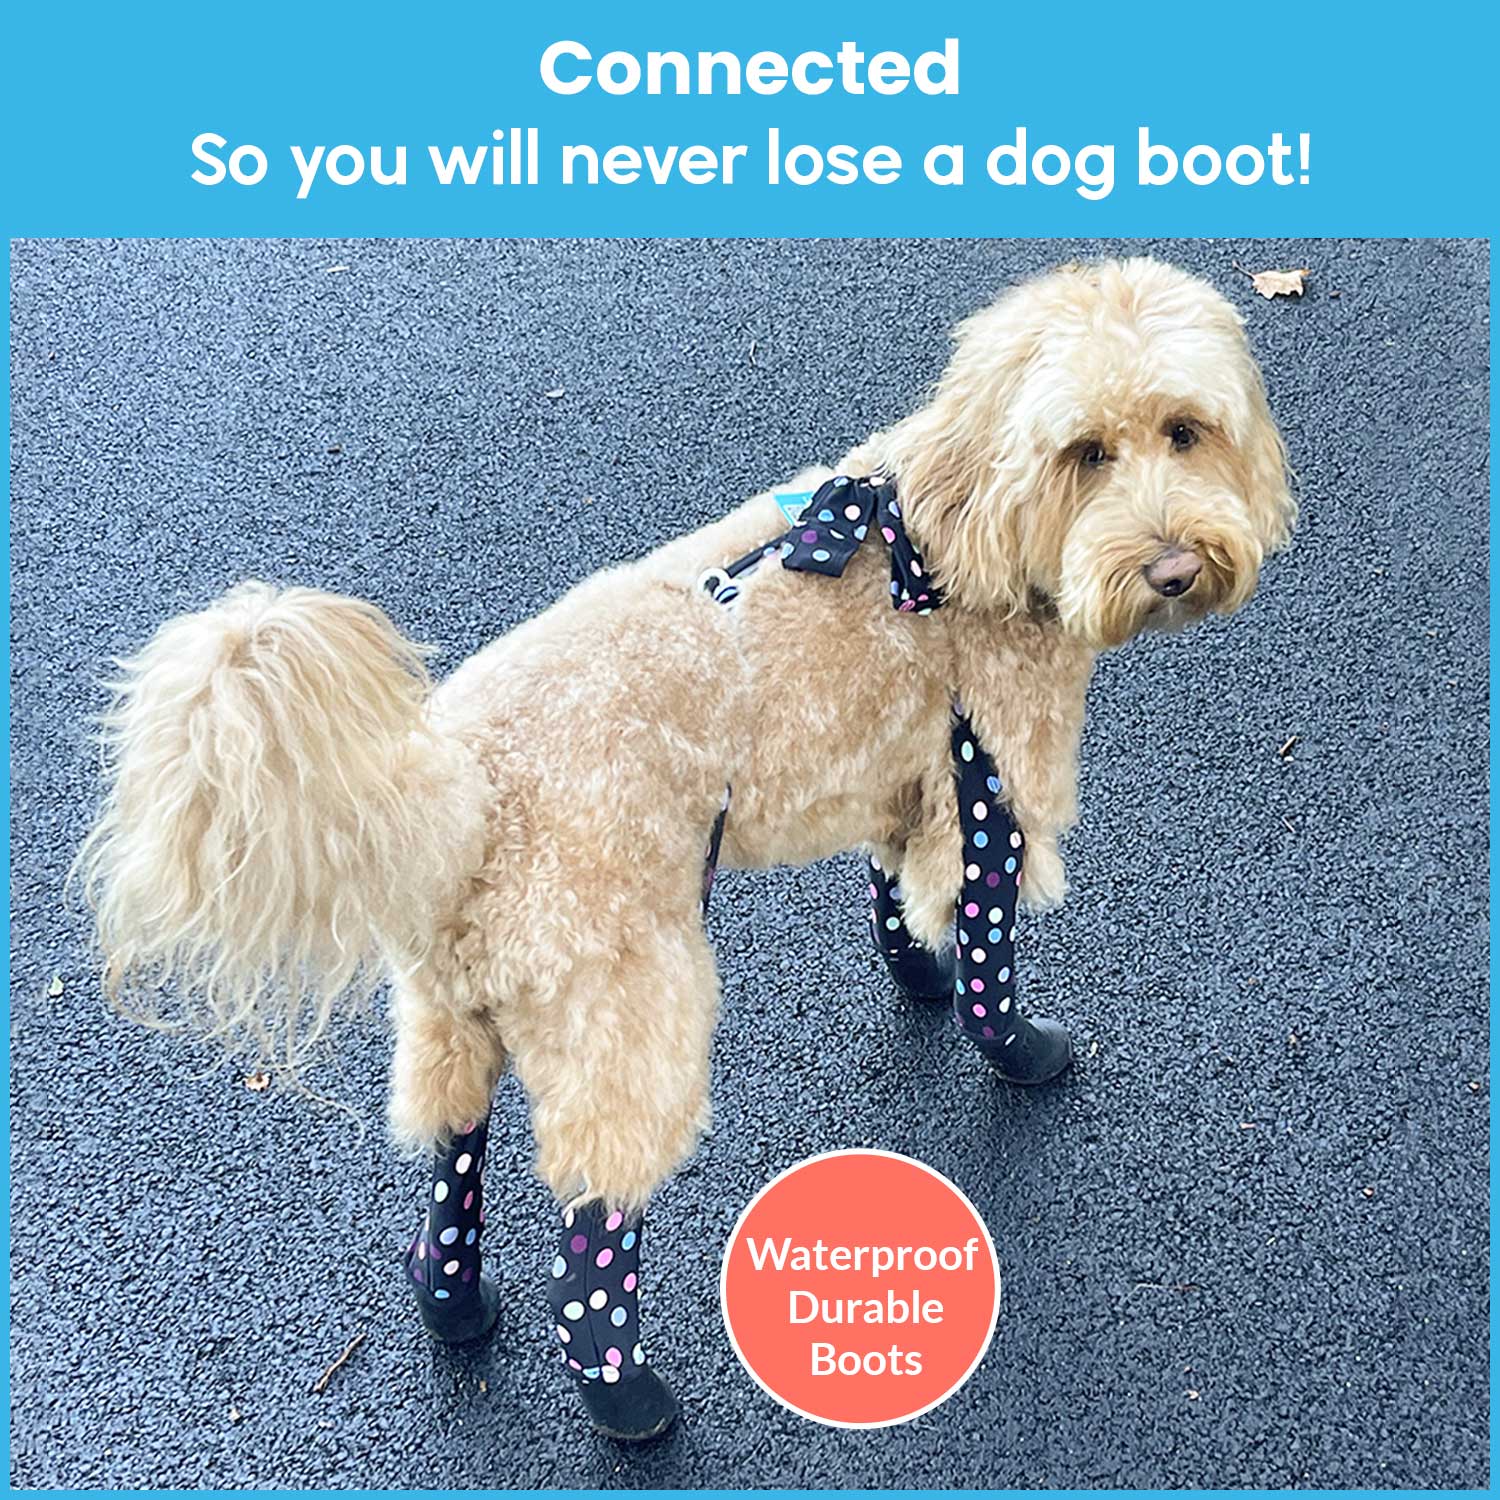 Walkee Paws The world's first dog leggings - Original Version 